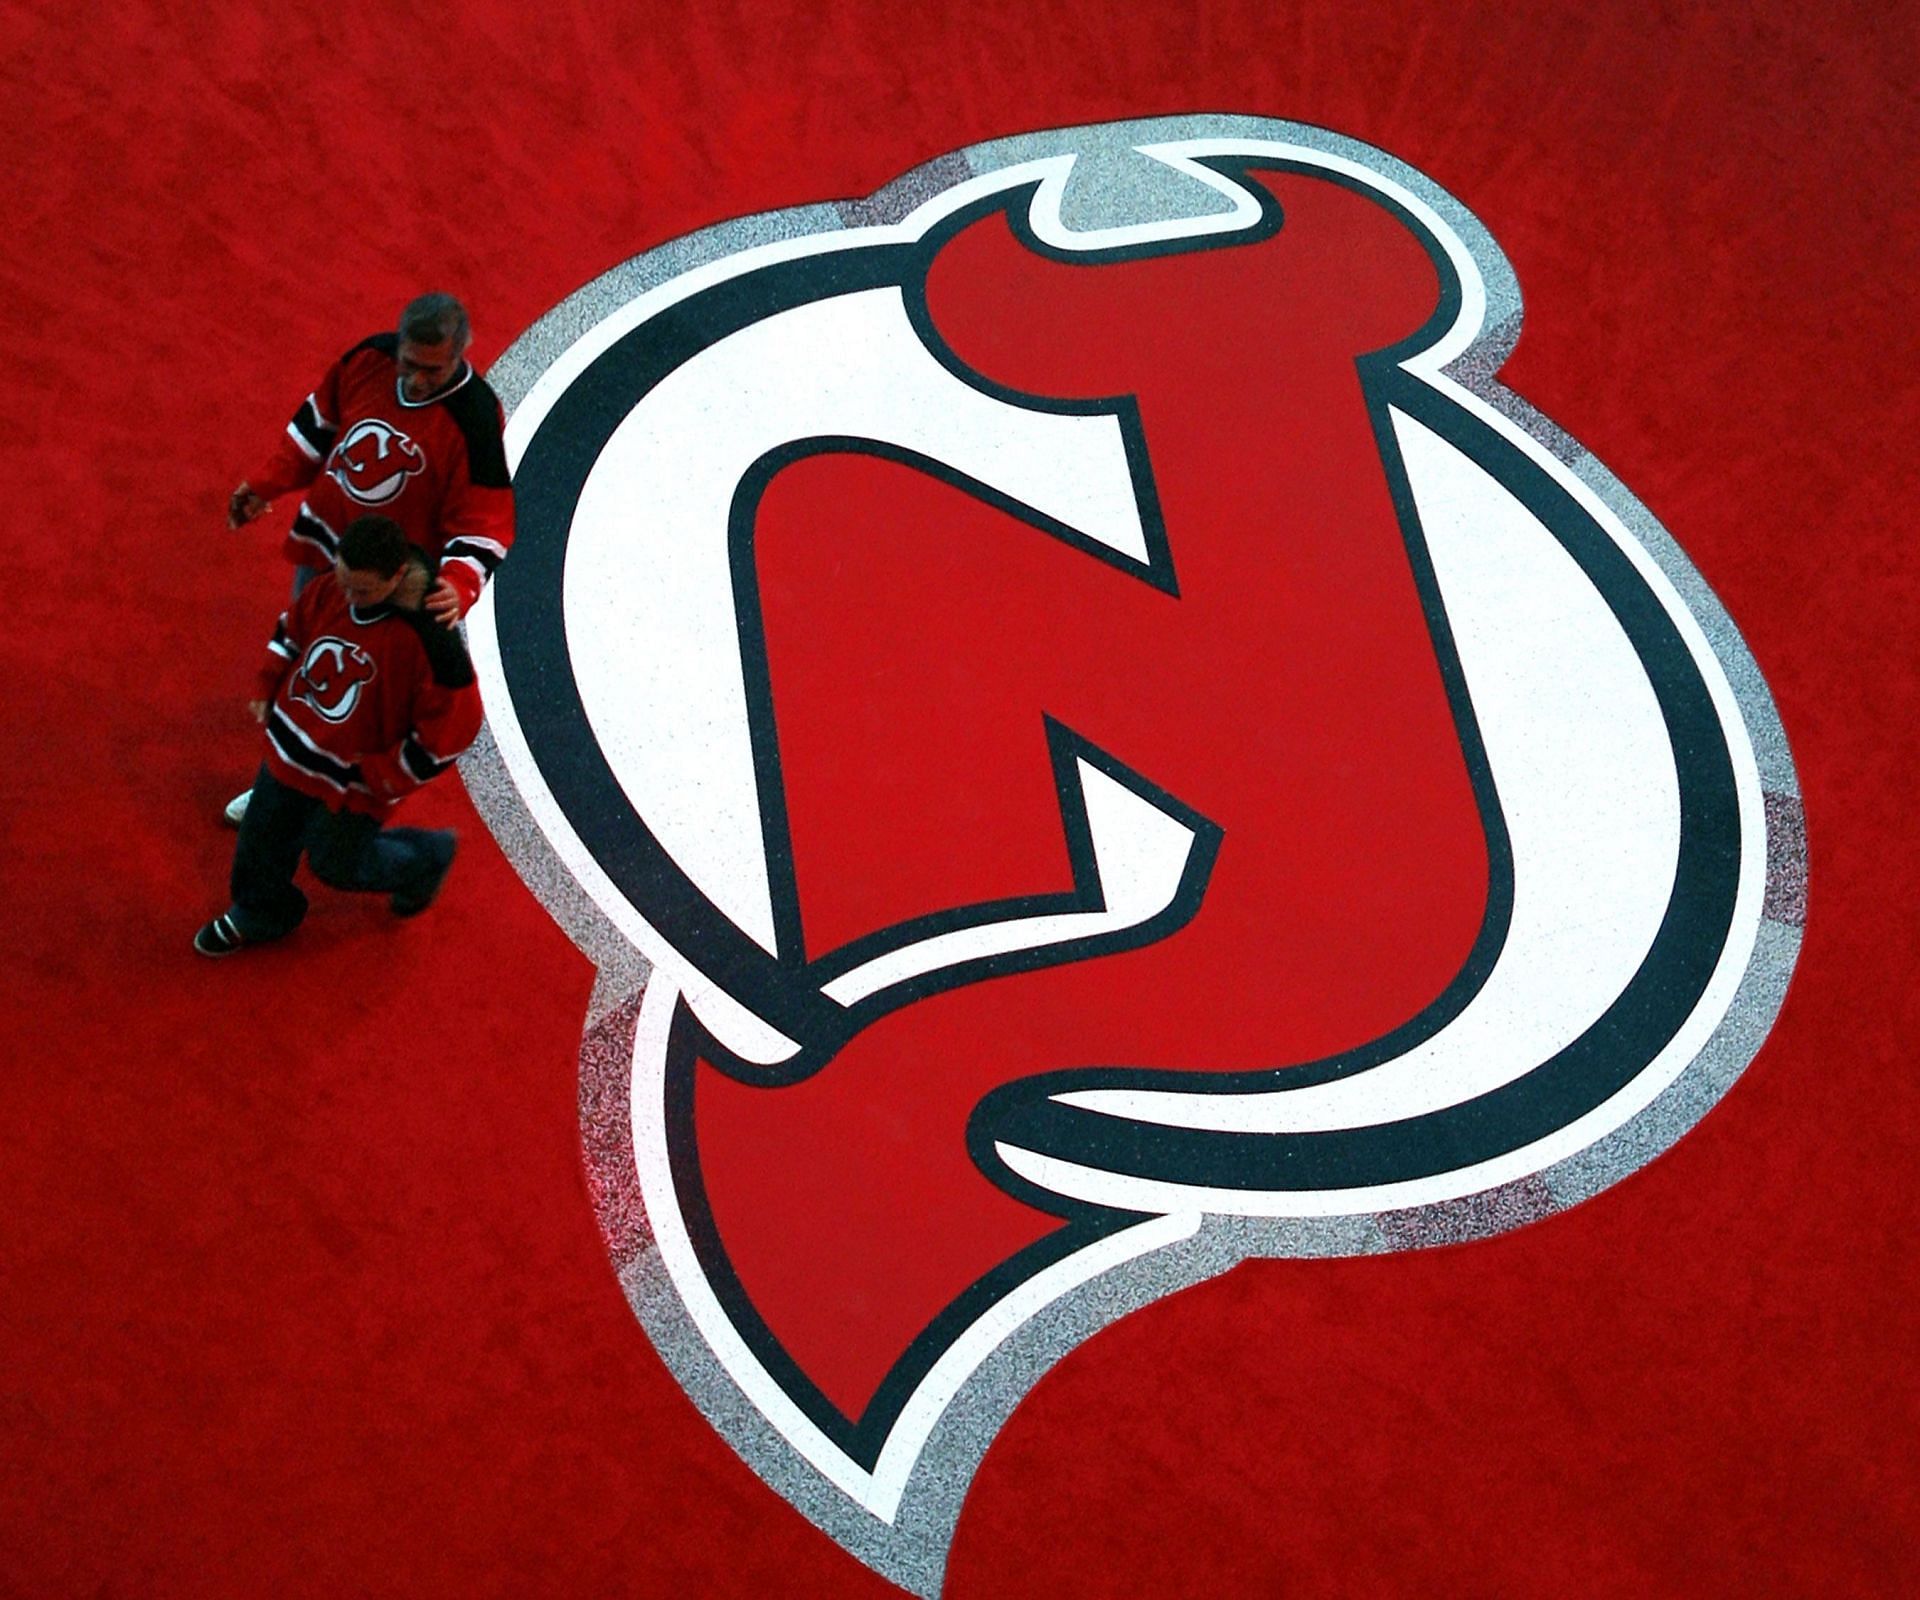 New Jersey Devils 2023 Preseason Schedule Dates, time, venue & more